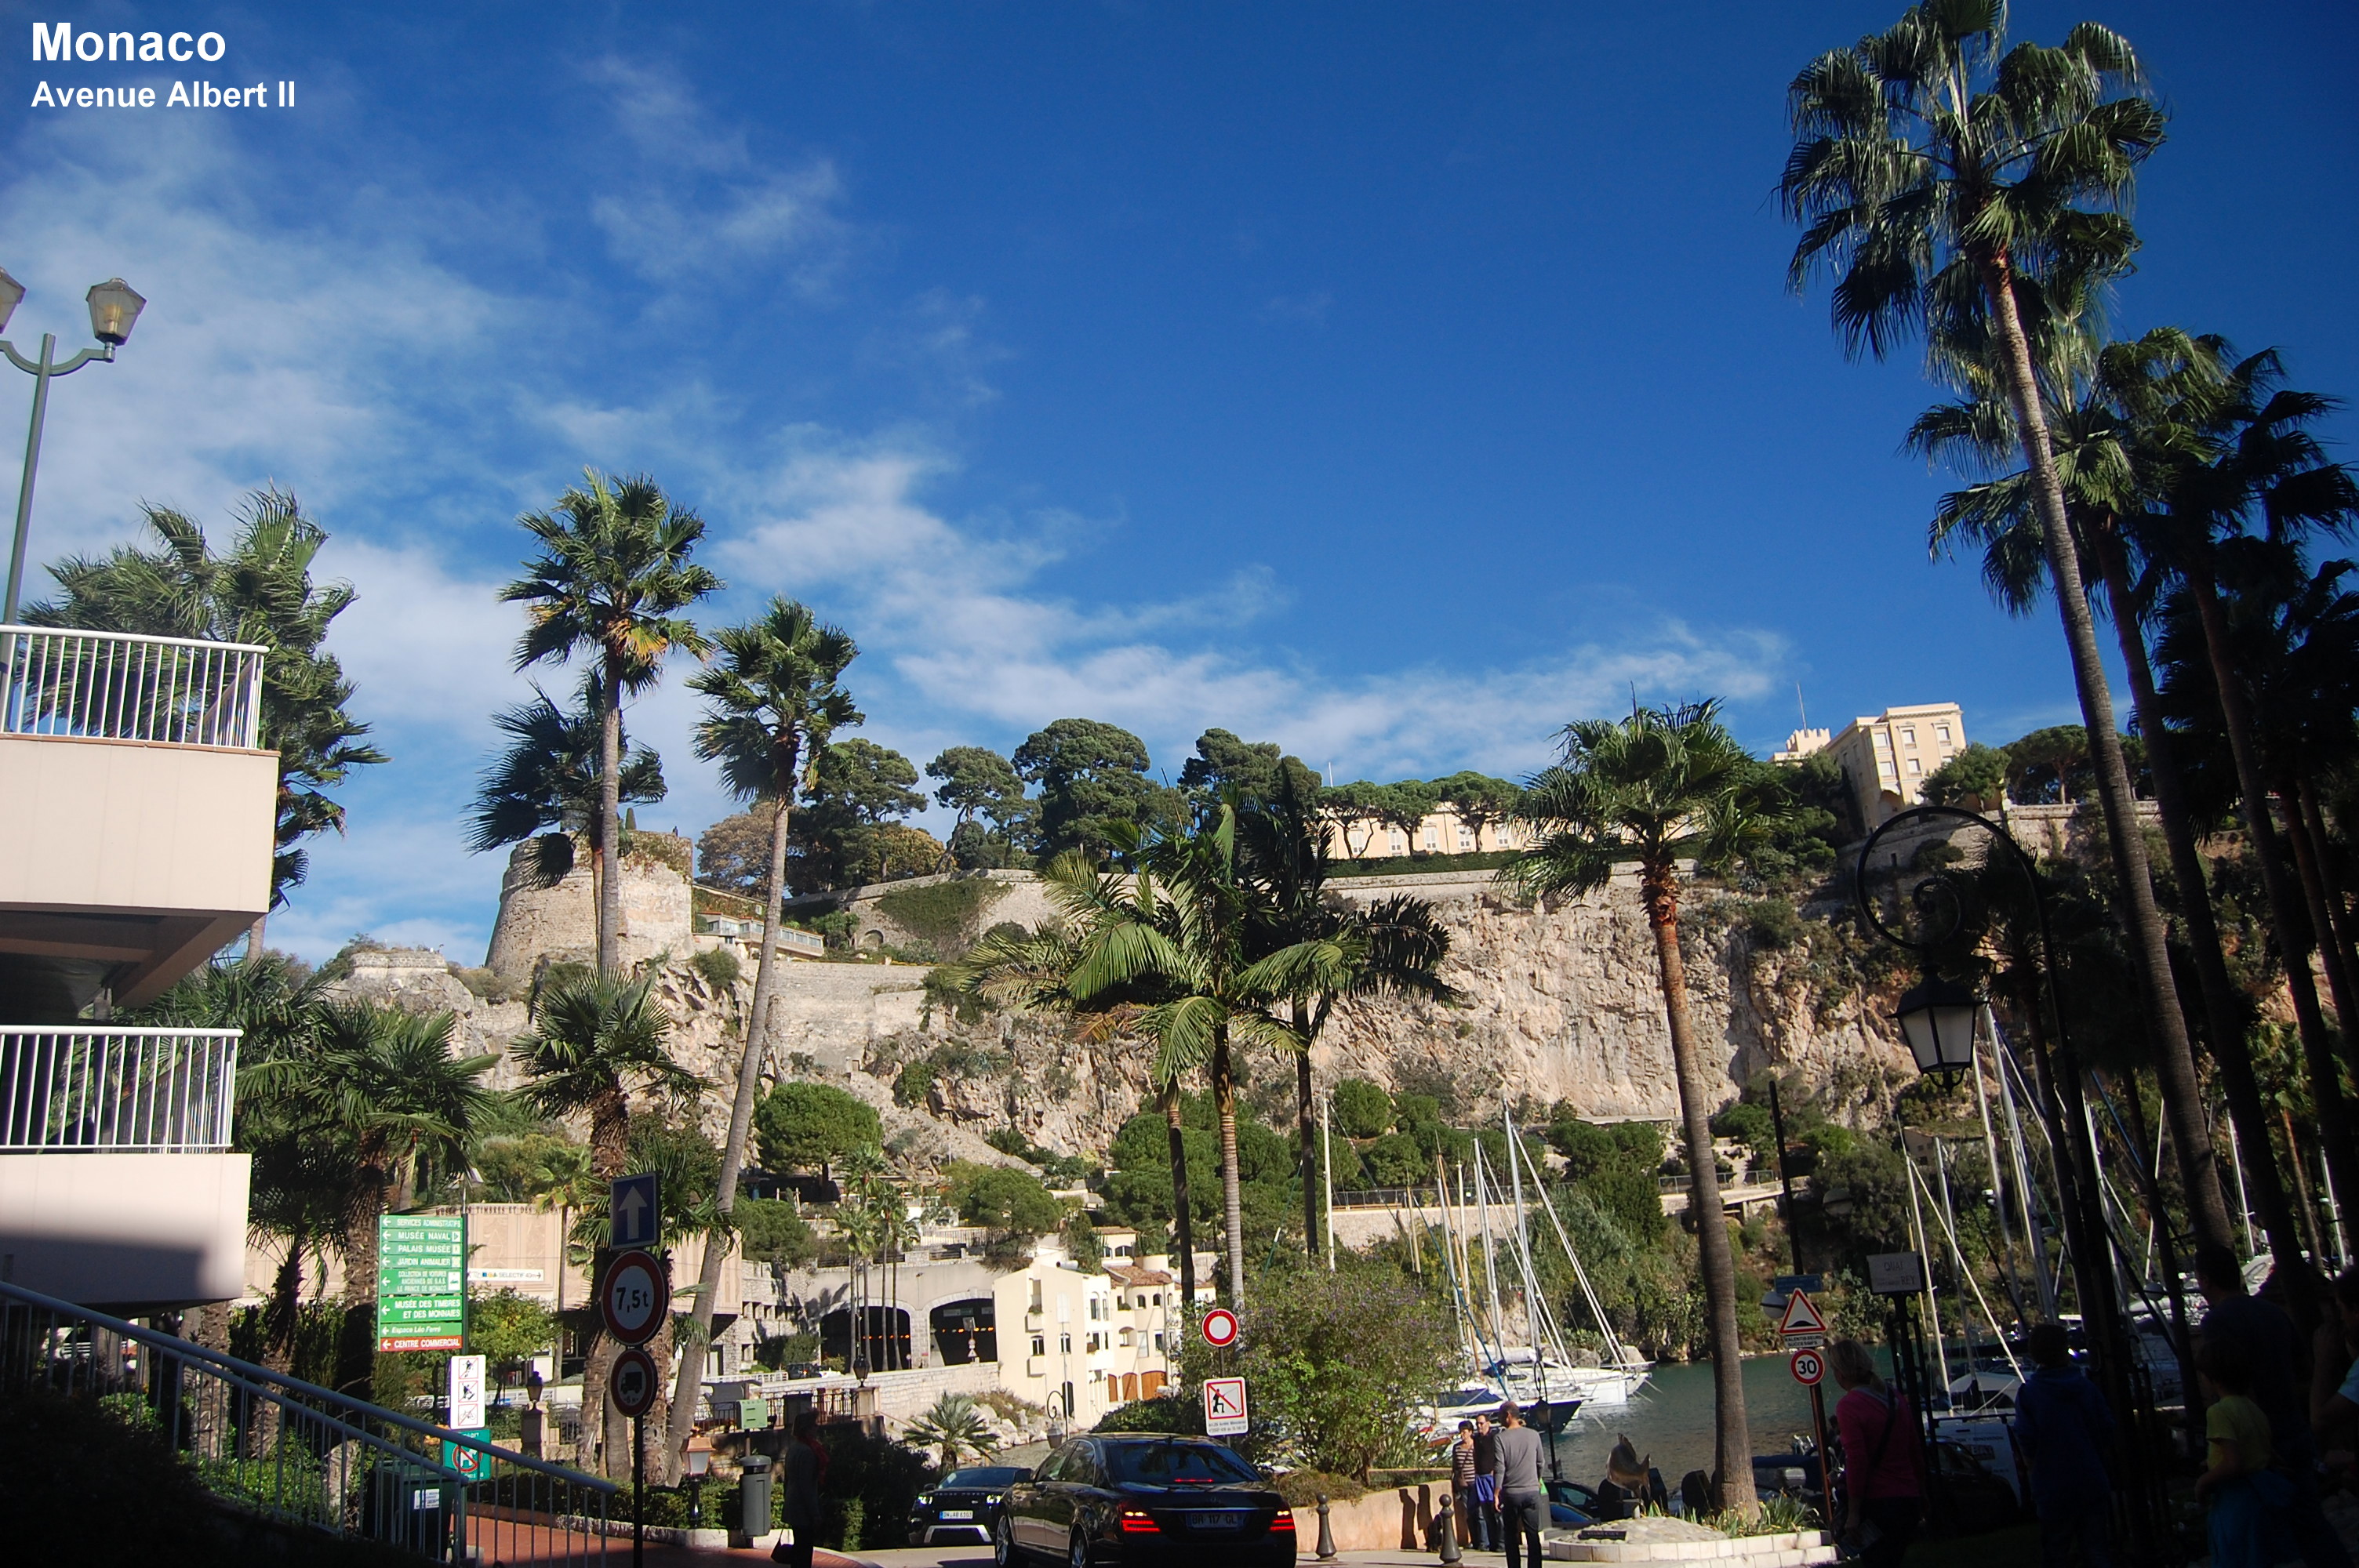 Avenue Albert II - Monaco